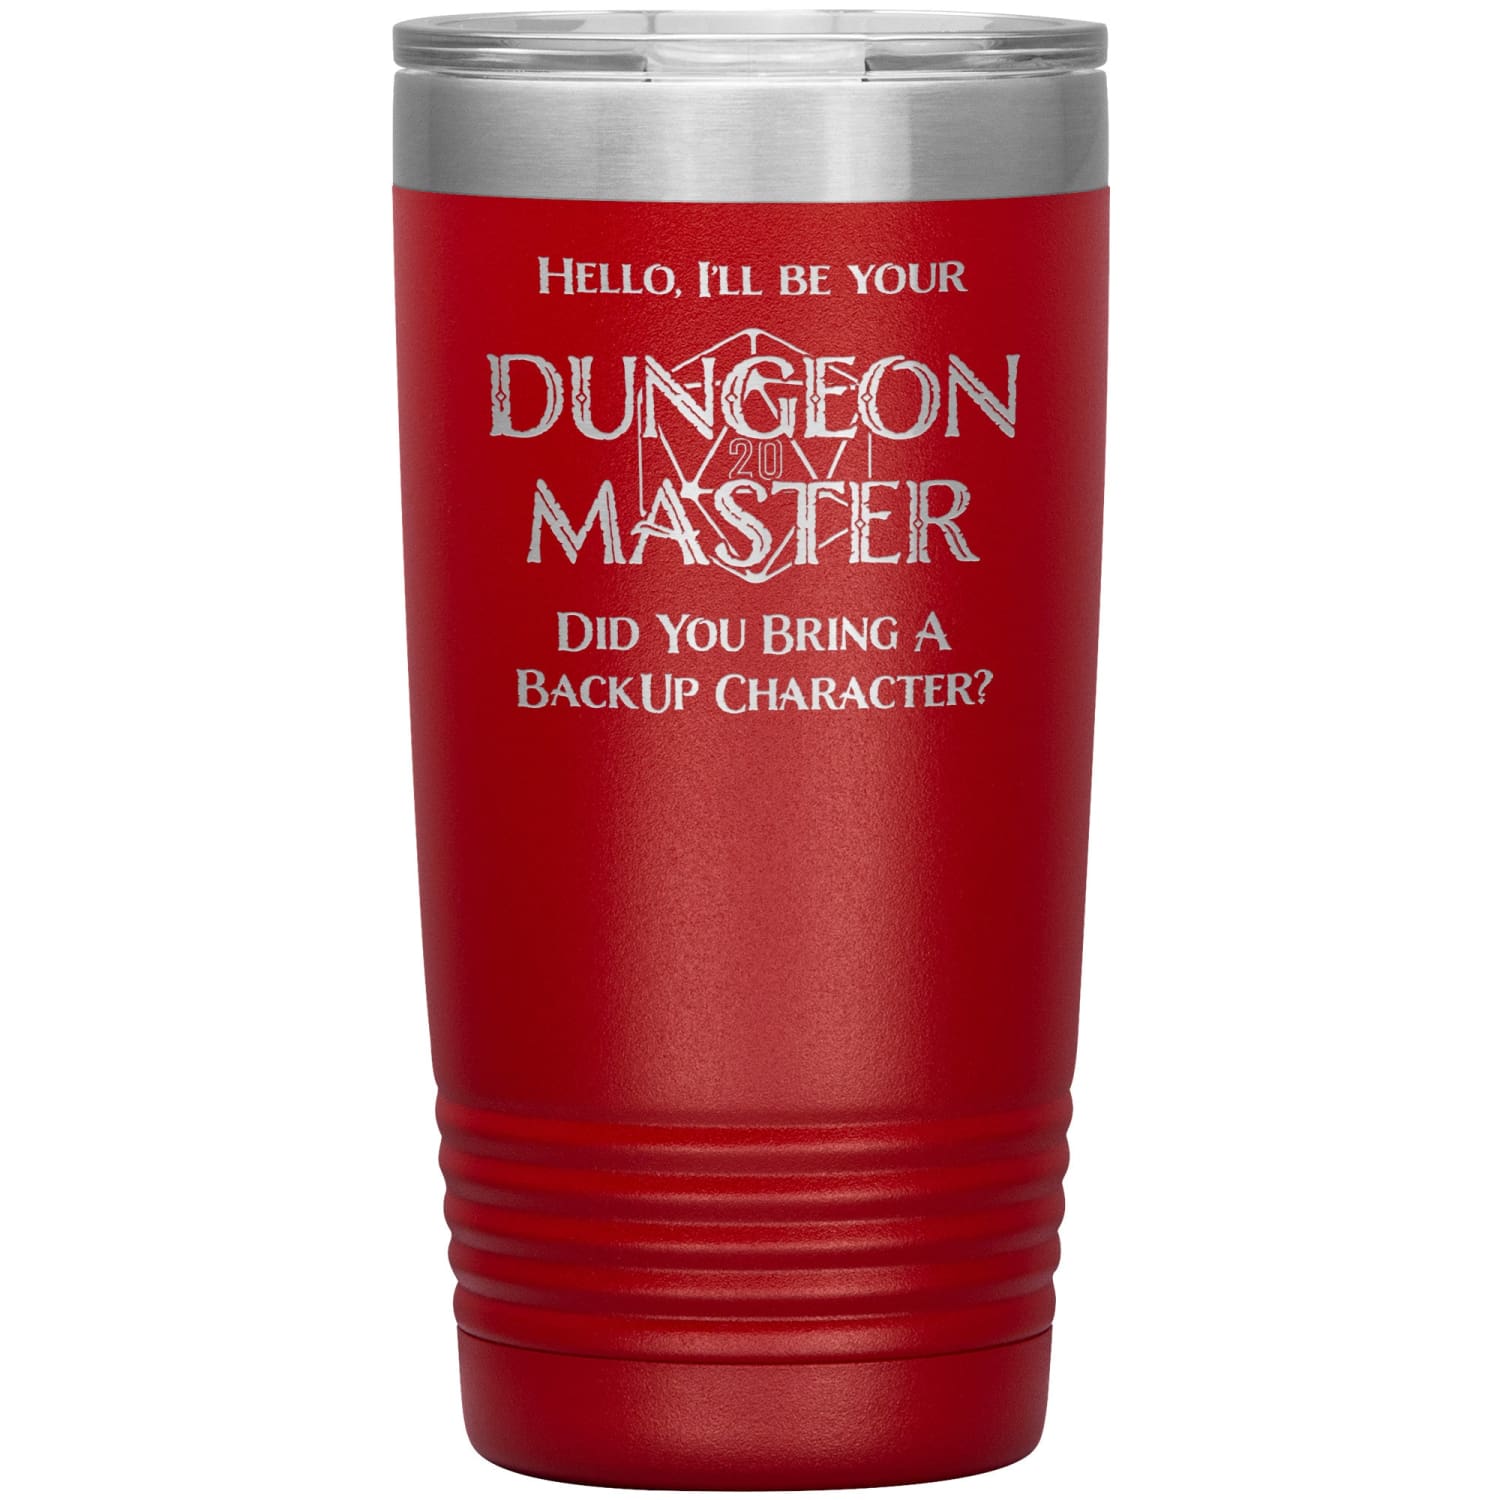 Dungeon Master DM Backup 20oz Vacuum Tumbler - Red - Tumblers